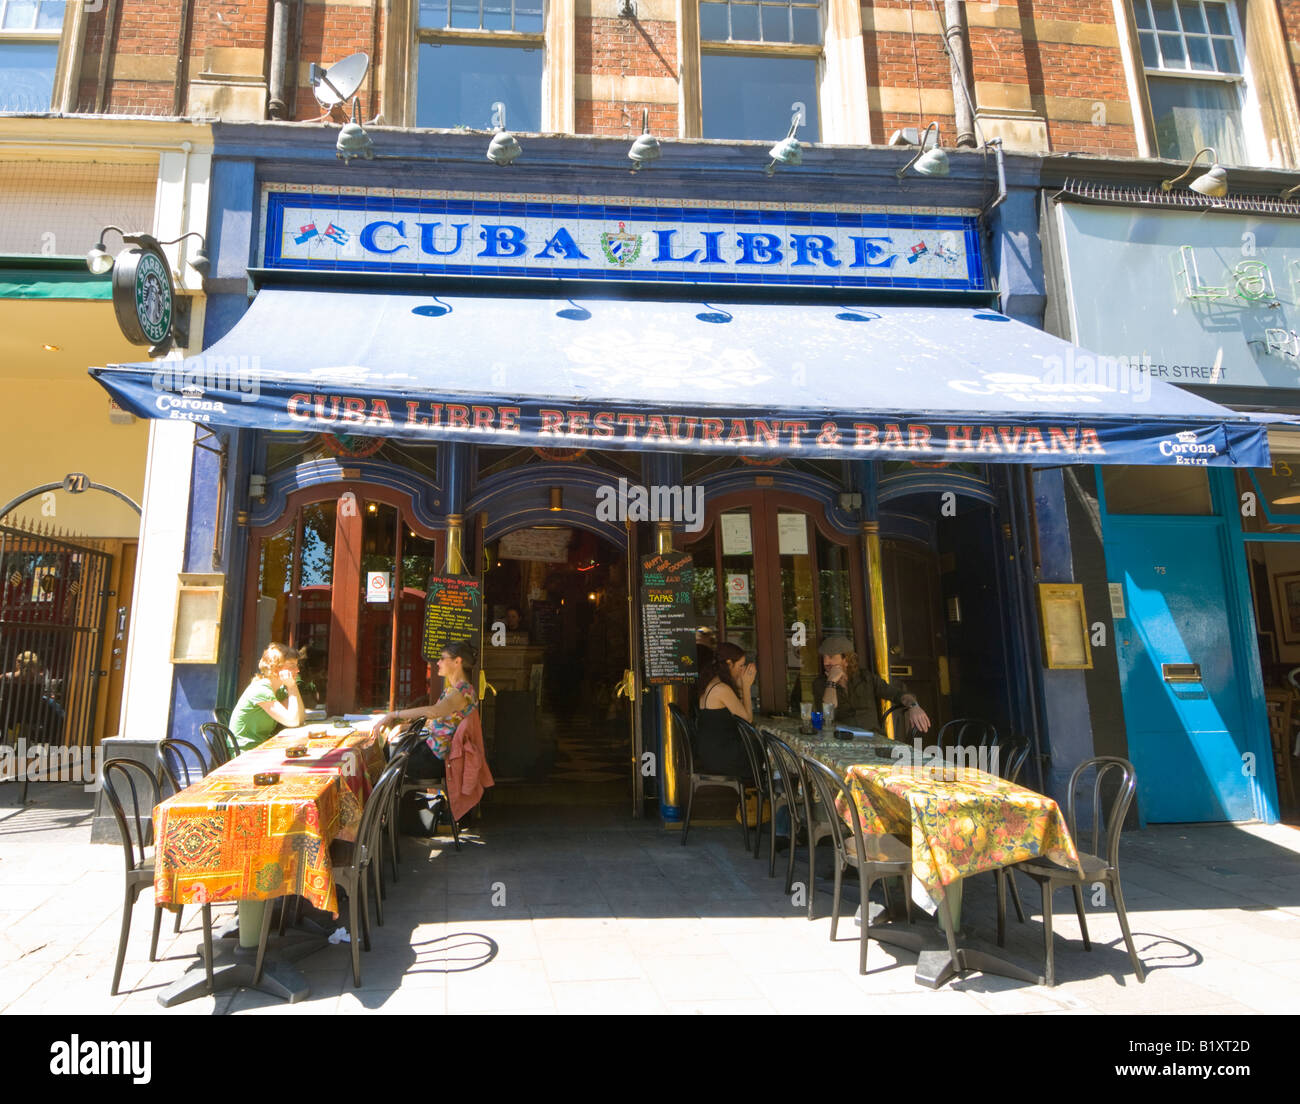 Cuba Libre Restaurant Upper Street Islington London Stock Photo